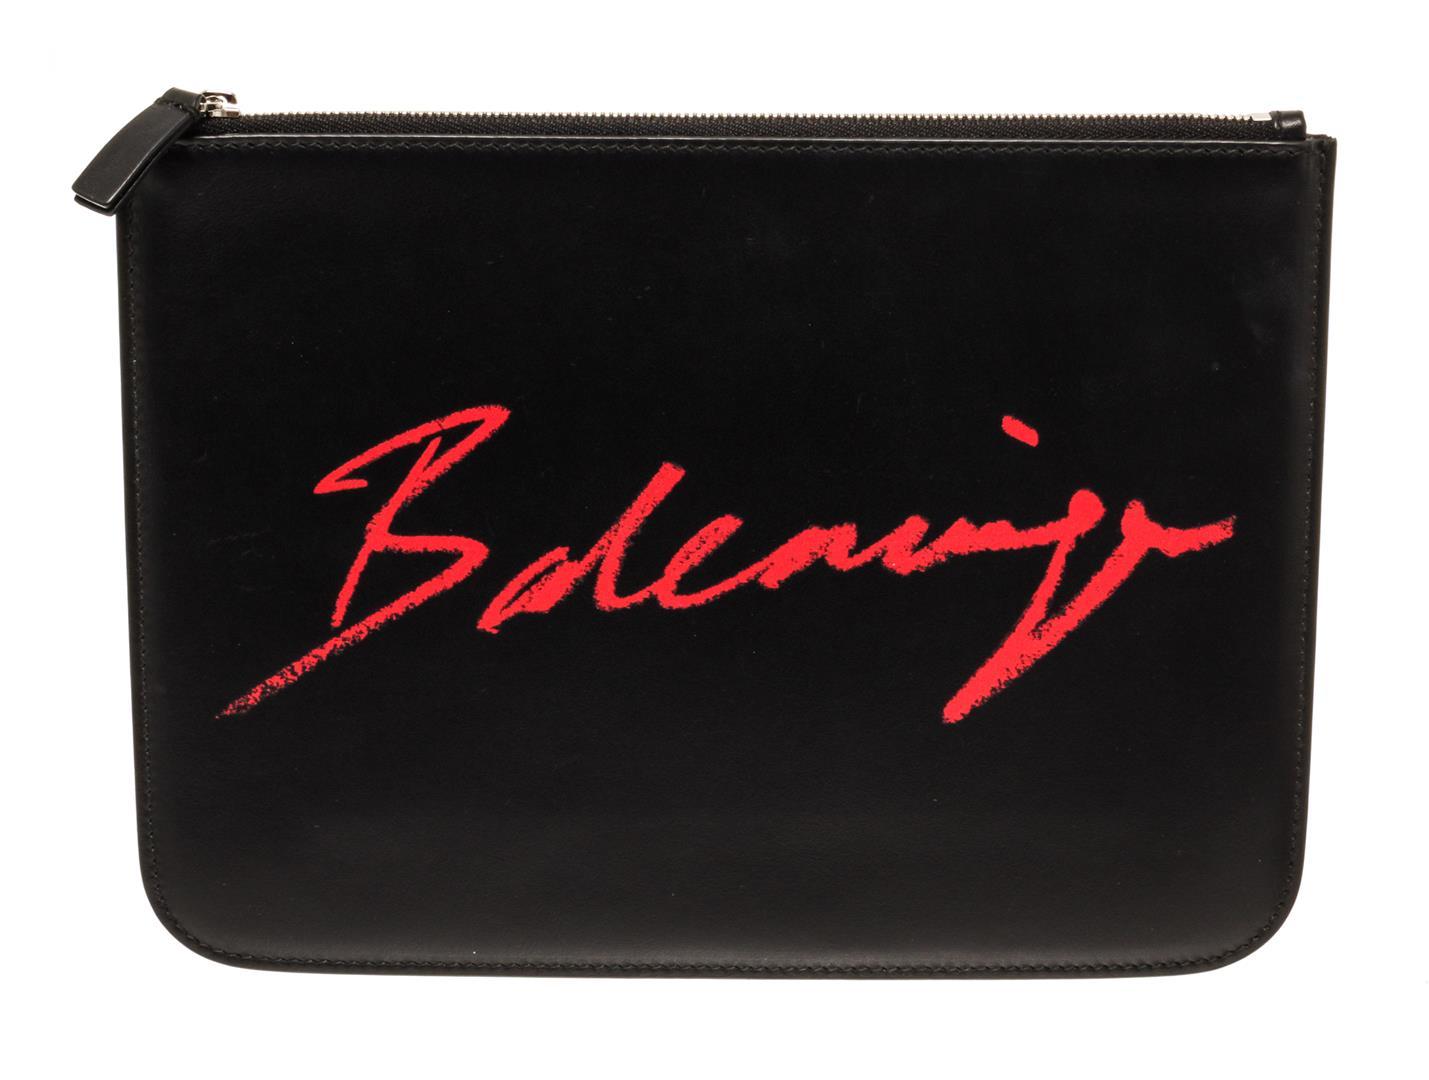 Balenciaga Black Leather Everyday Script Logo Medium Pouch